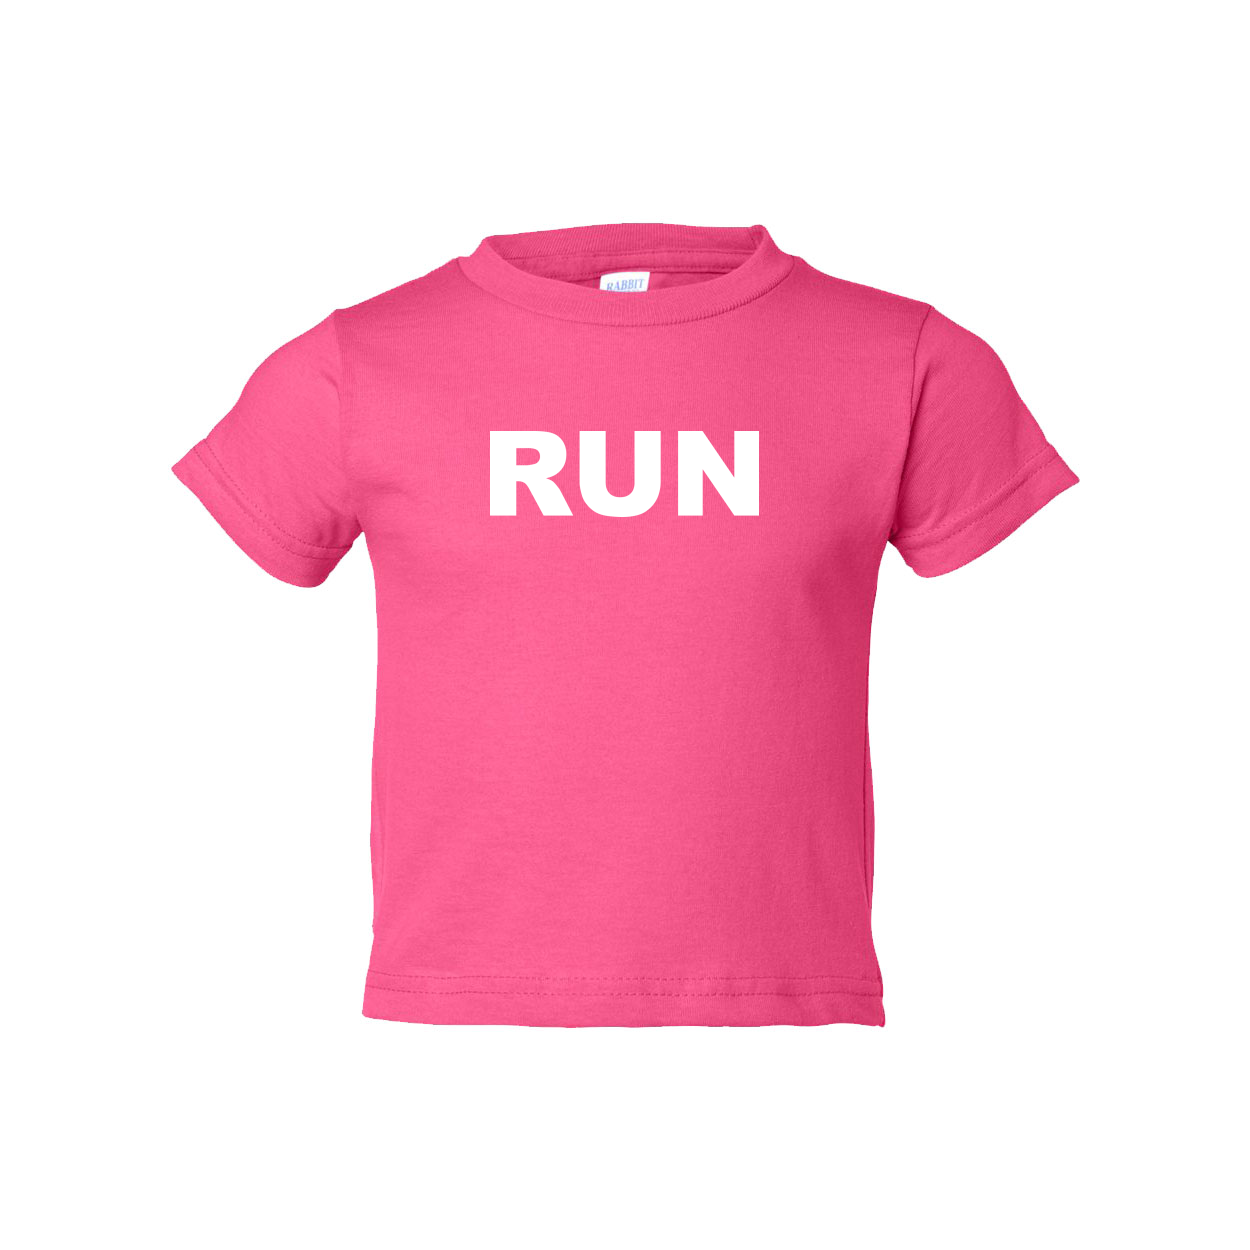 Run Brand Logo Classic Toddler T-Shirt Pink